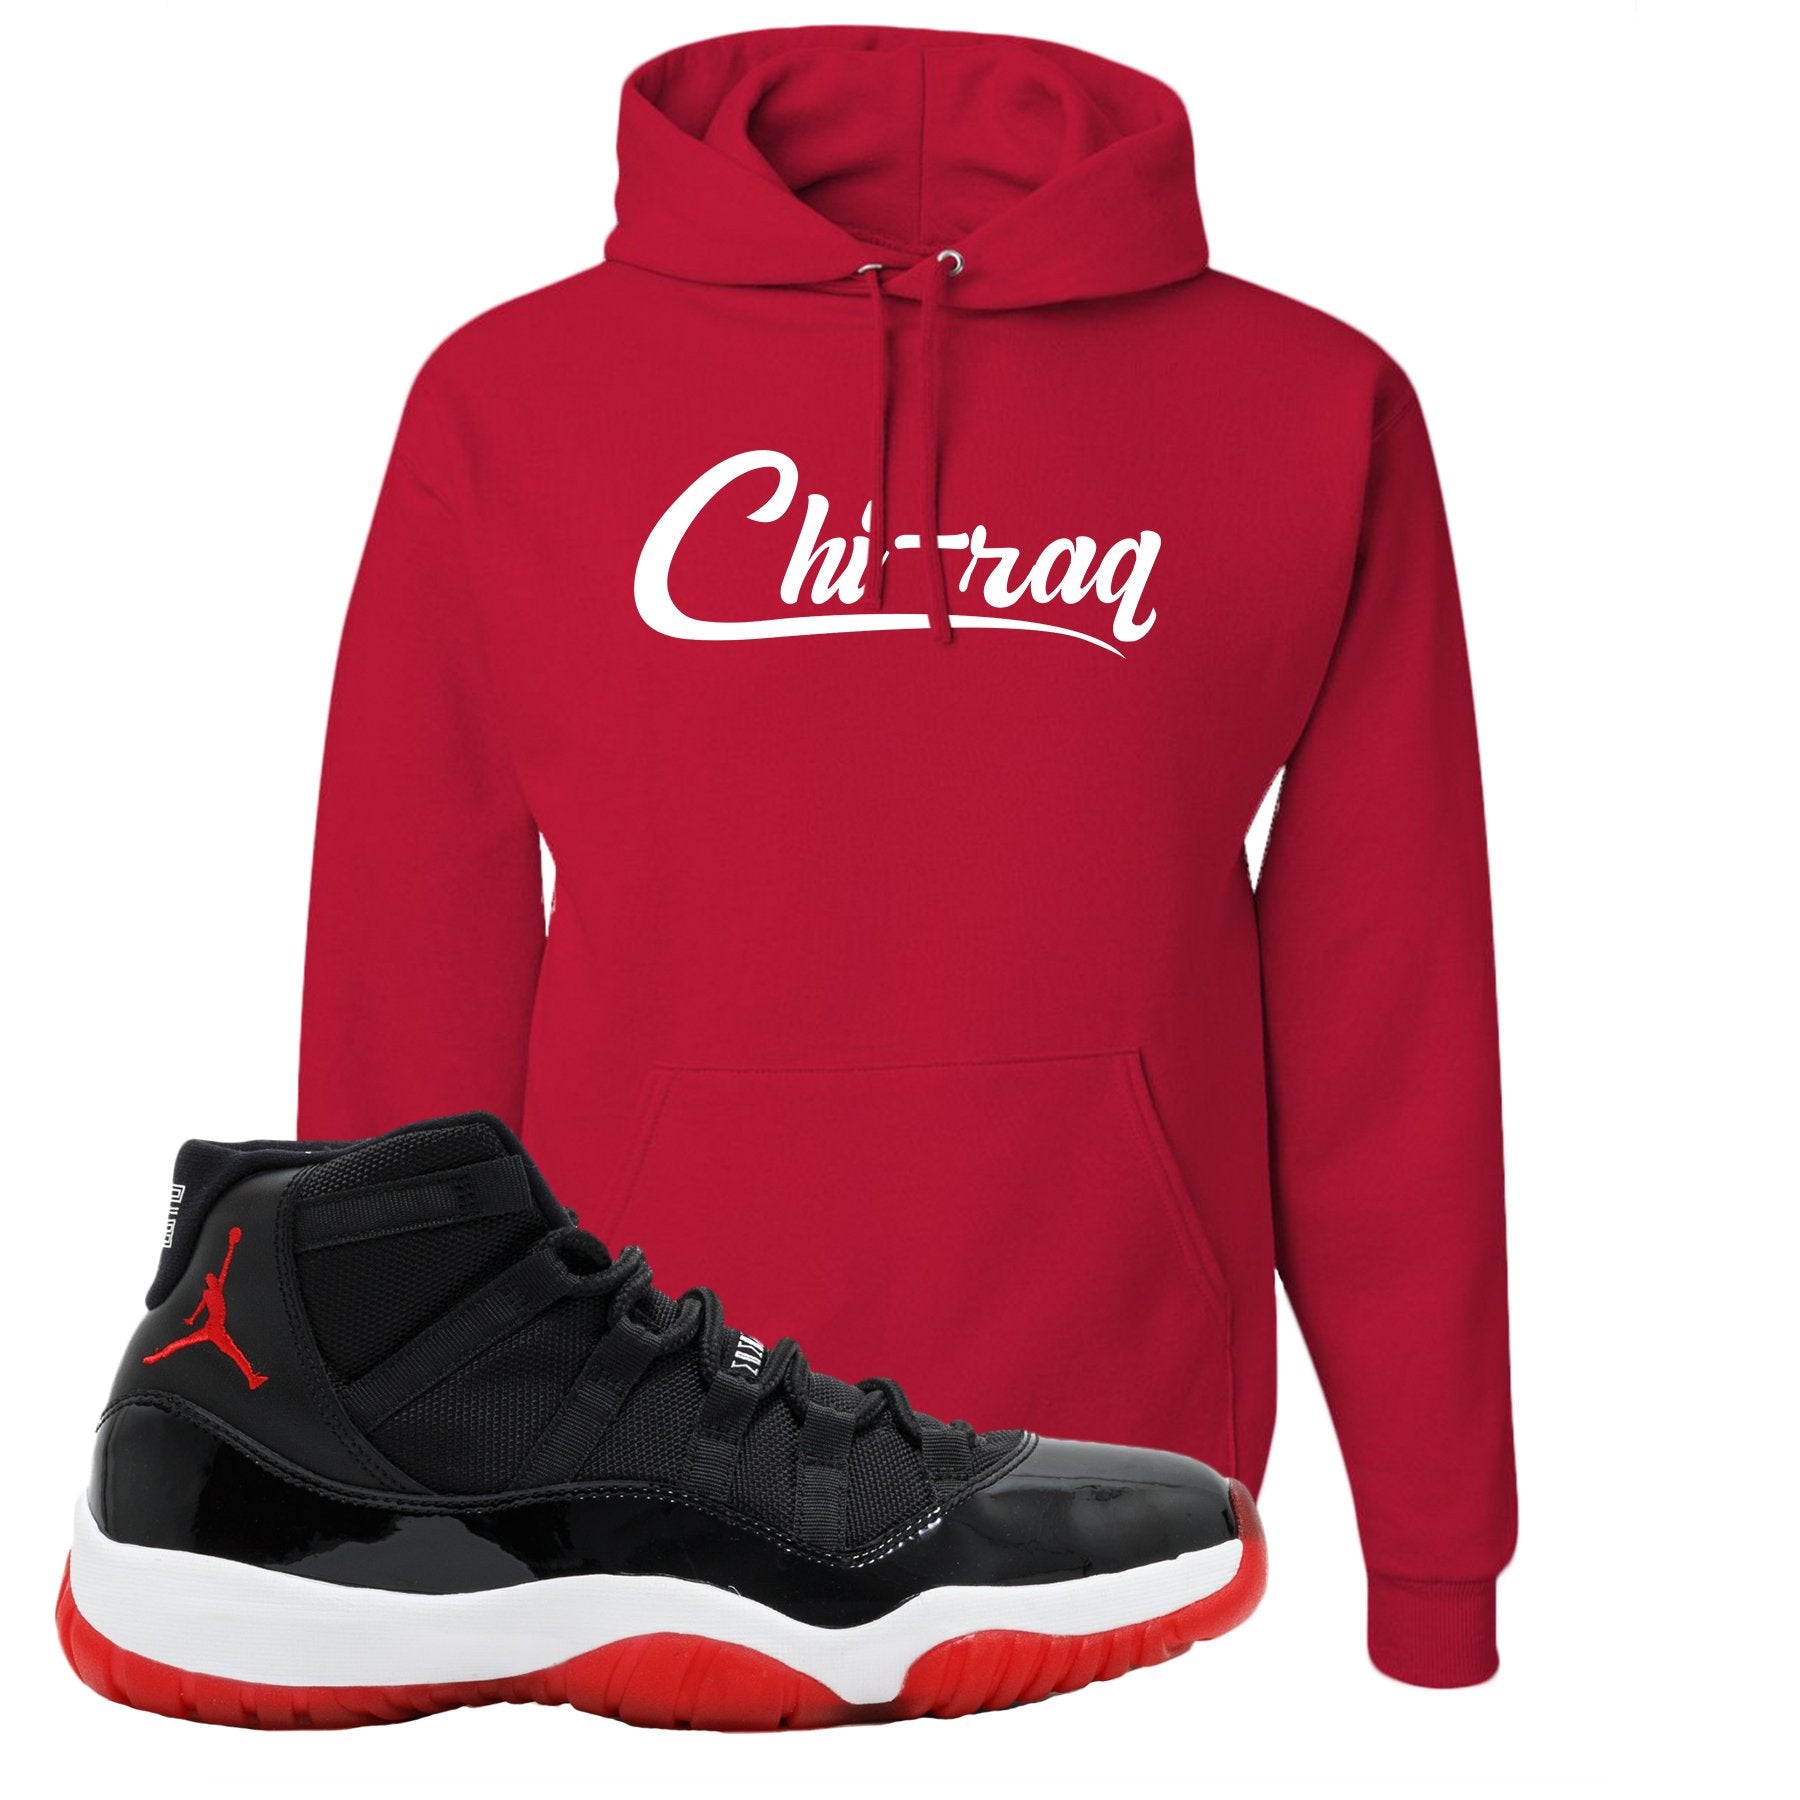 Jordan 11 Bred Chi-raq Red Sneaker Hook Up Pullover Hoodie